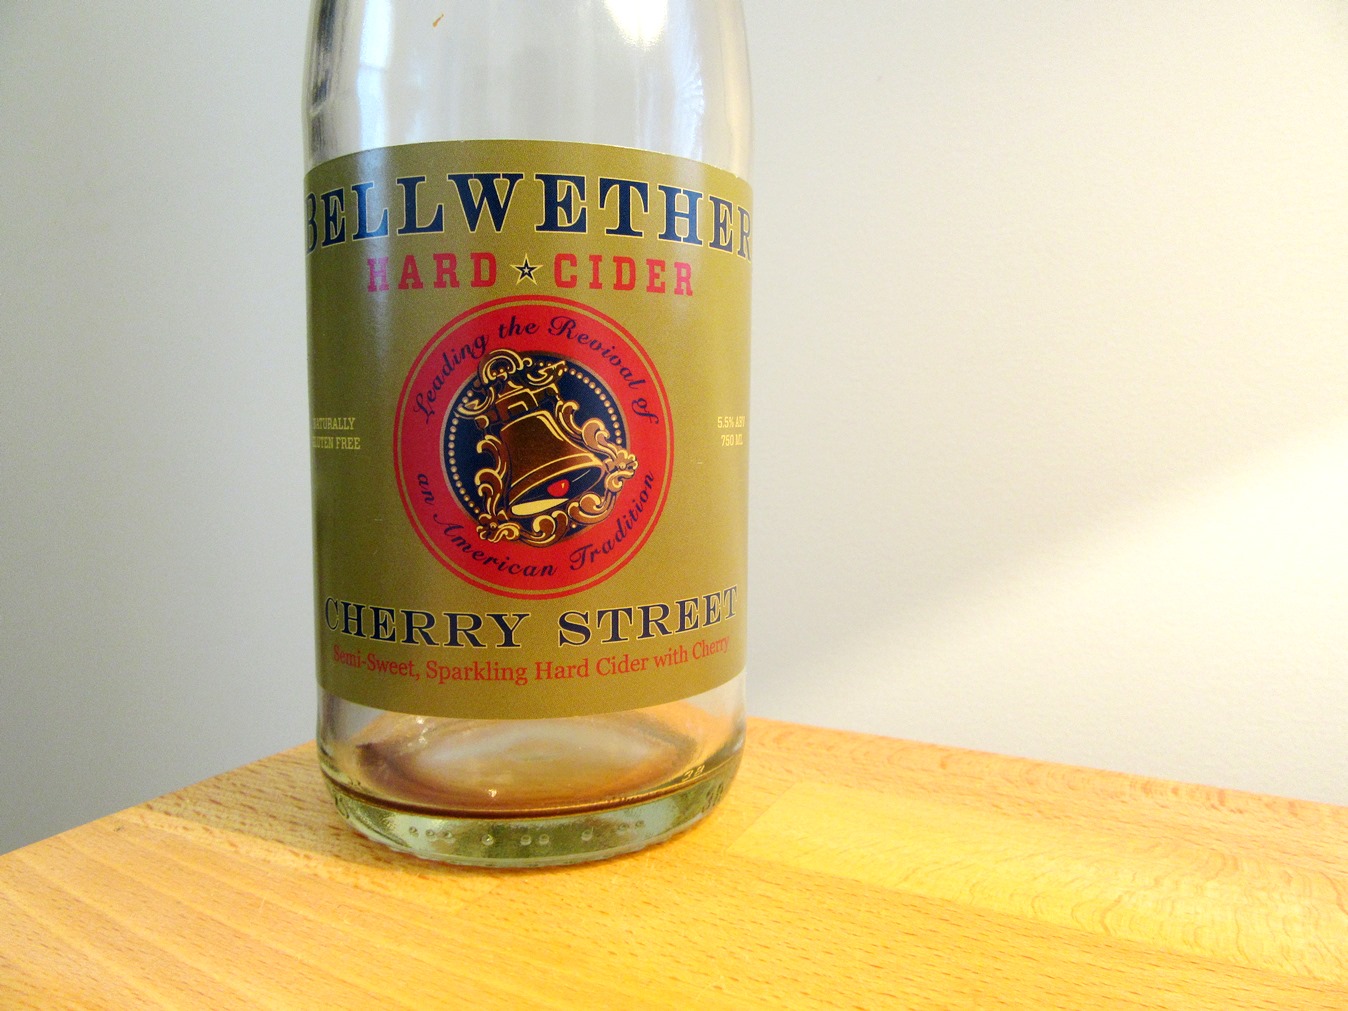 Bellwether, Cherry Street Hard Cider, New York, Wine Casual